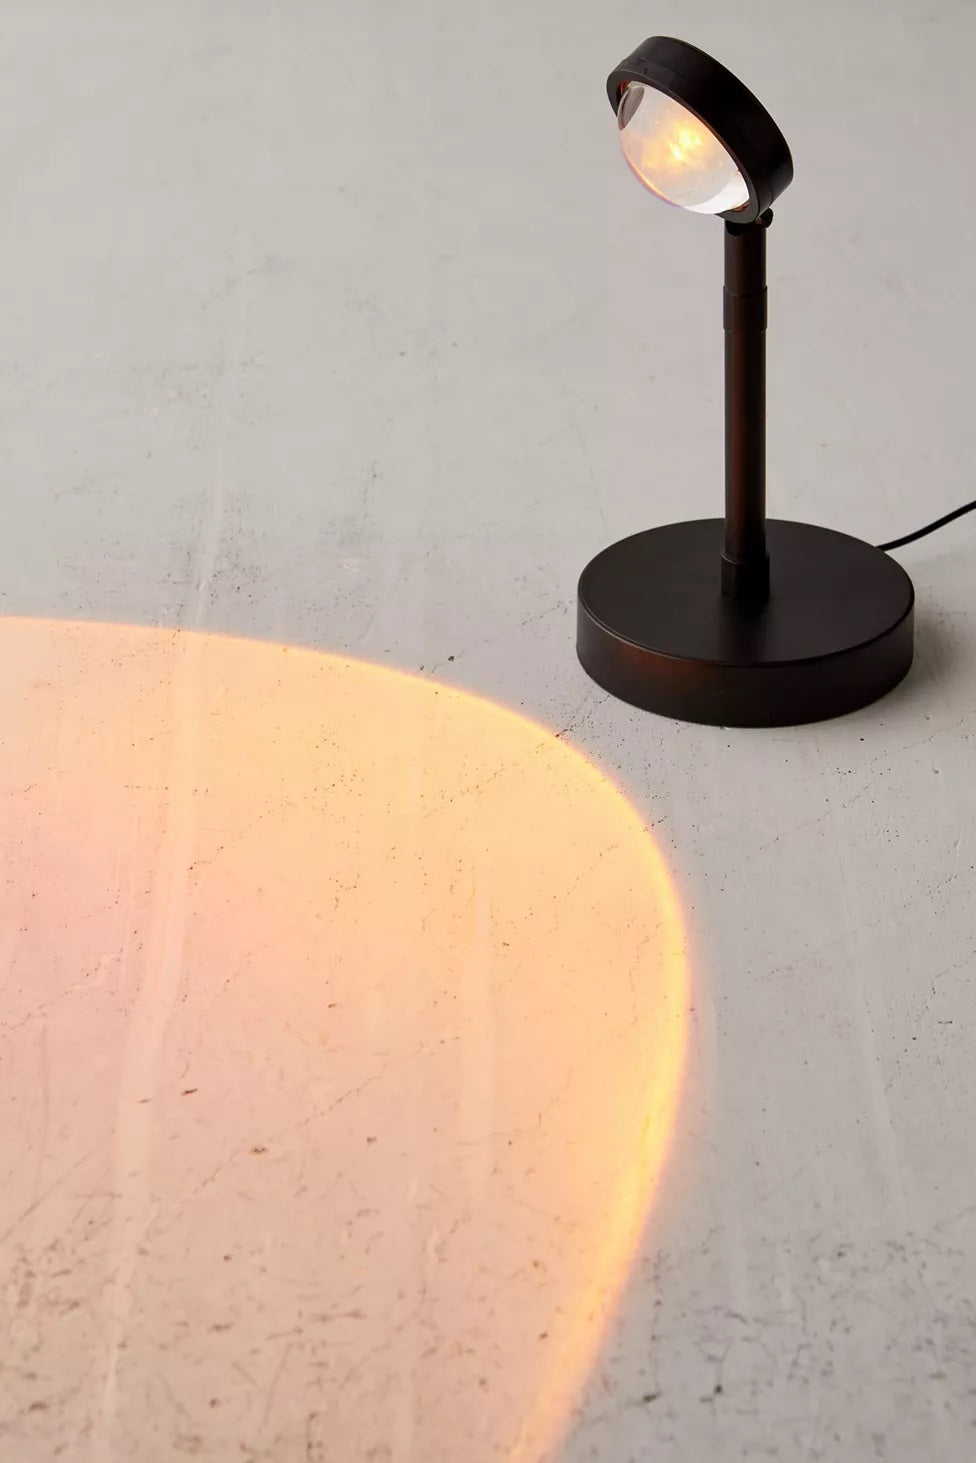 Sunset Lamp Projector